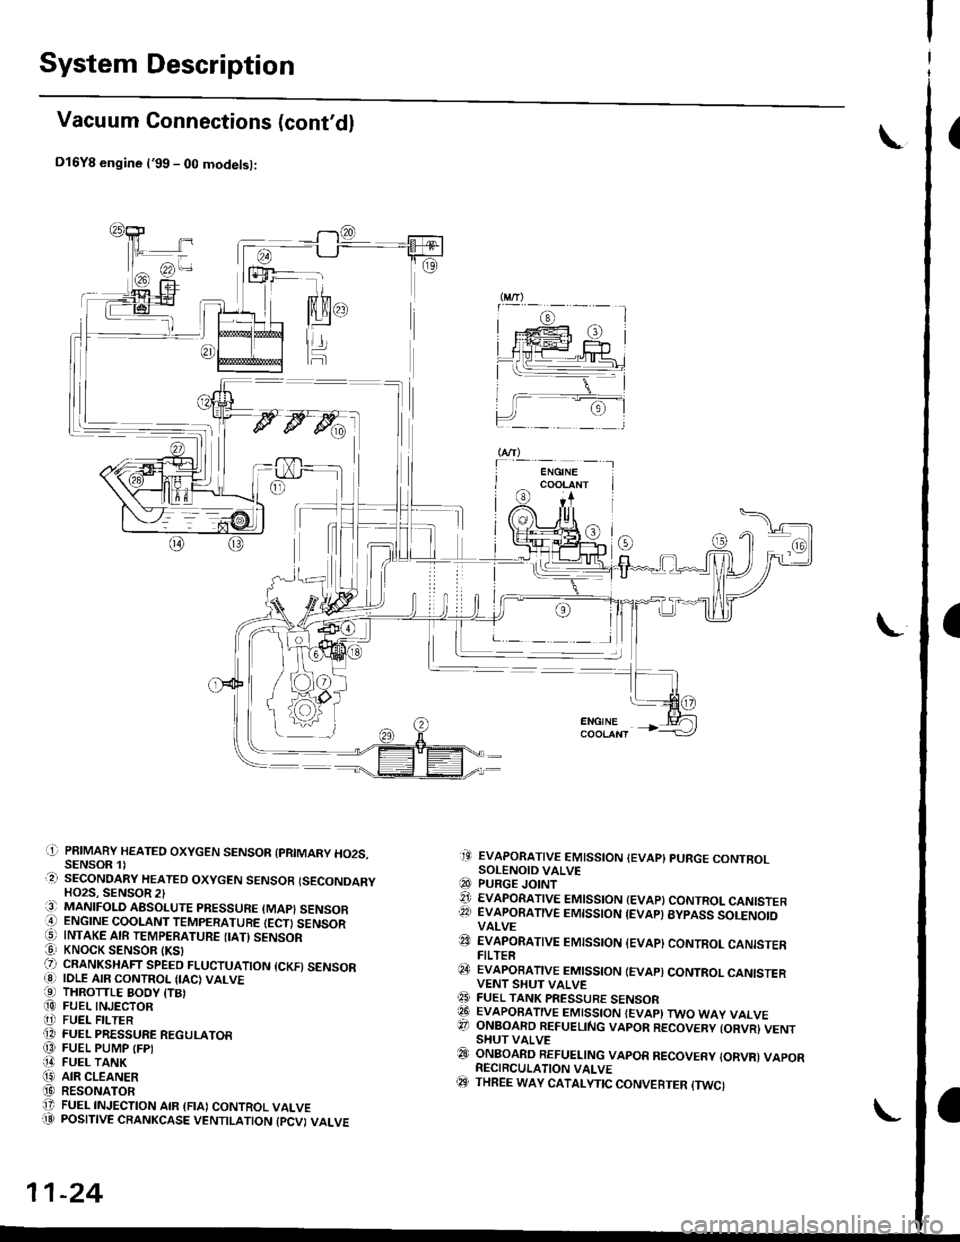 HONDA CIVIC 1997 6.G Workshop Manual System Description
Vacuum Connections (contdl
D16Y8 engine l99 - 00 modetsl:
(]-i PAIMARY HEATEO OXYGEN SENSOR {PRIMARY HO2S,SENSOR 1)..2r SECONOARY HEATEO OXycEN SENSOB ISECONDARYHO2S, SENSOR 2li3)